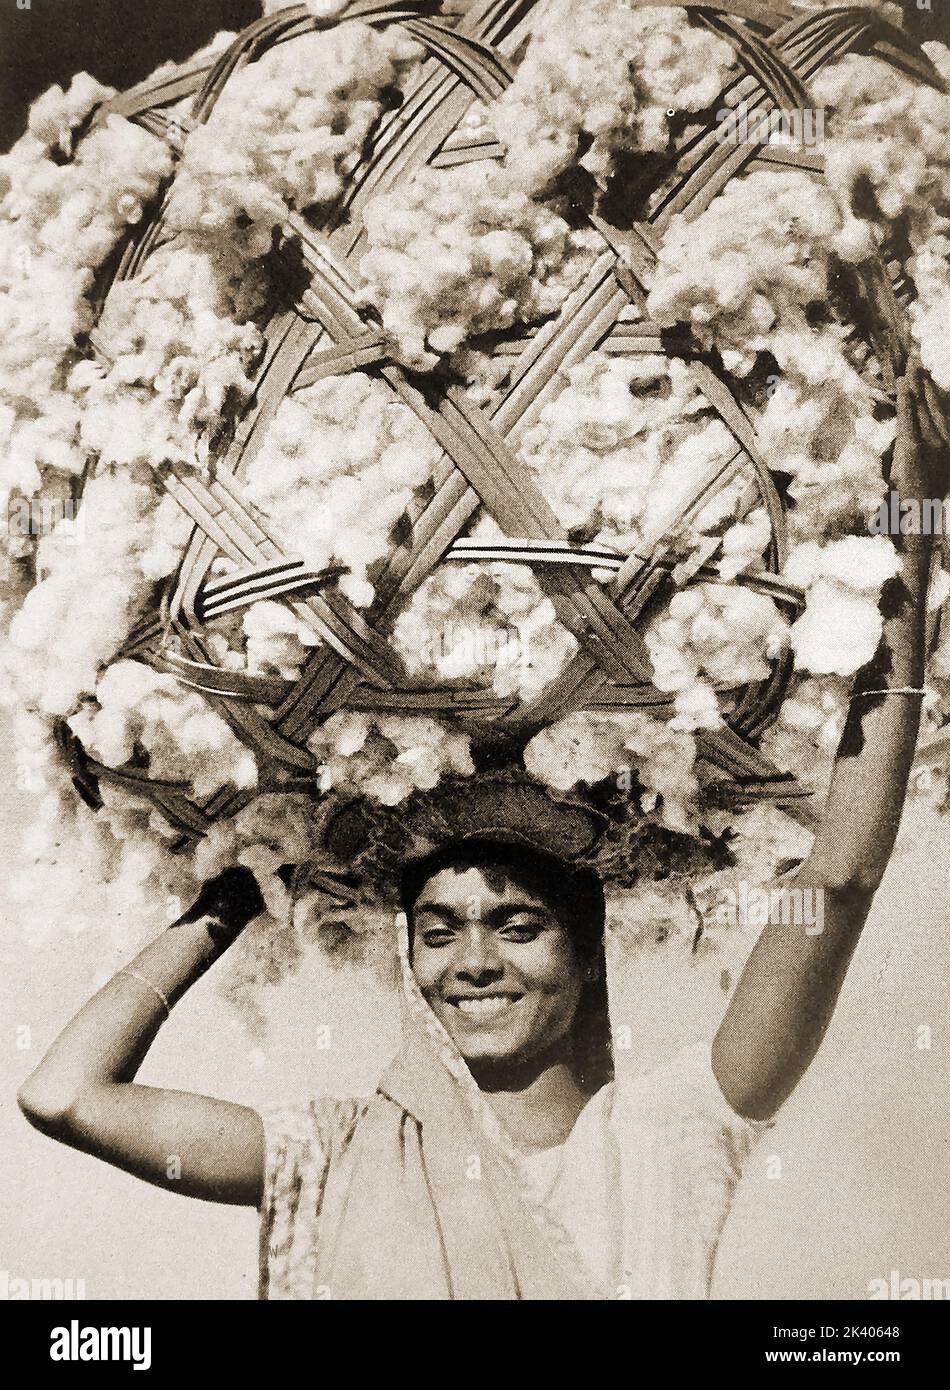 Una foto de 1947 de un trabajador indio que llevaba un fardo de algodón en un marco de mimbre en su cabeza para su uso en su exitosa industria textil. --- 1947 में एक भारतीय कामगार की एक तस्वीर जिसमें वह अपने सफल कपड़ा उद्योग में उपयोग के लिए अपने सिर पर एक विकर फ्रेम में कपास की एक गांठ लिए हुए था। -- -۱۹۴۷ کی ایک تصویر جس میں ایک ہندوستانی مزدور اپنی کامیاب ٹیکسٹائل صنعت میں استعمال کے لیے اپنے سر پر بید کے فریم میں کپاس کی گانٹھ اٹھائے ہوئے ہے۔ Foto de stock